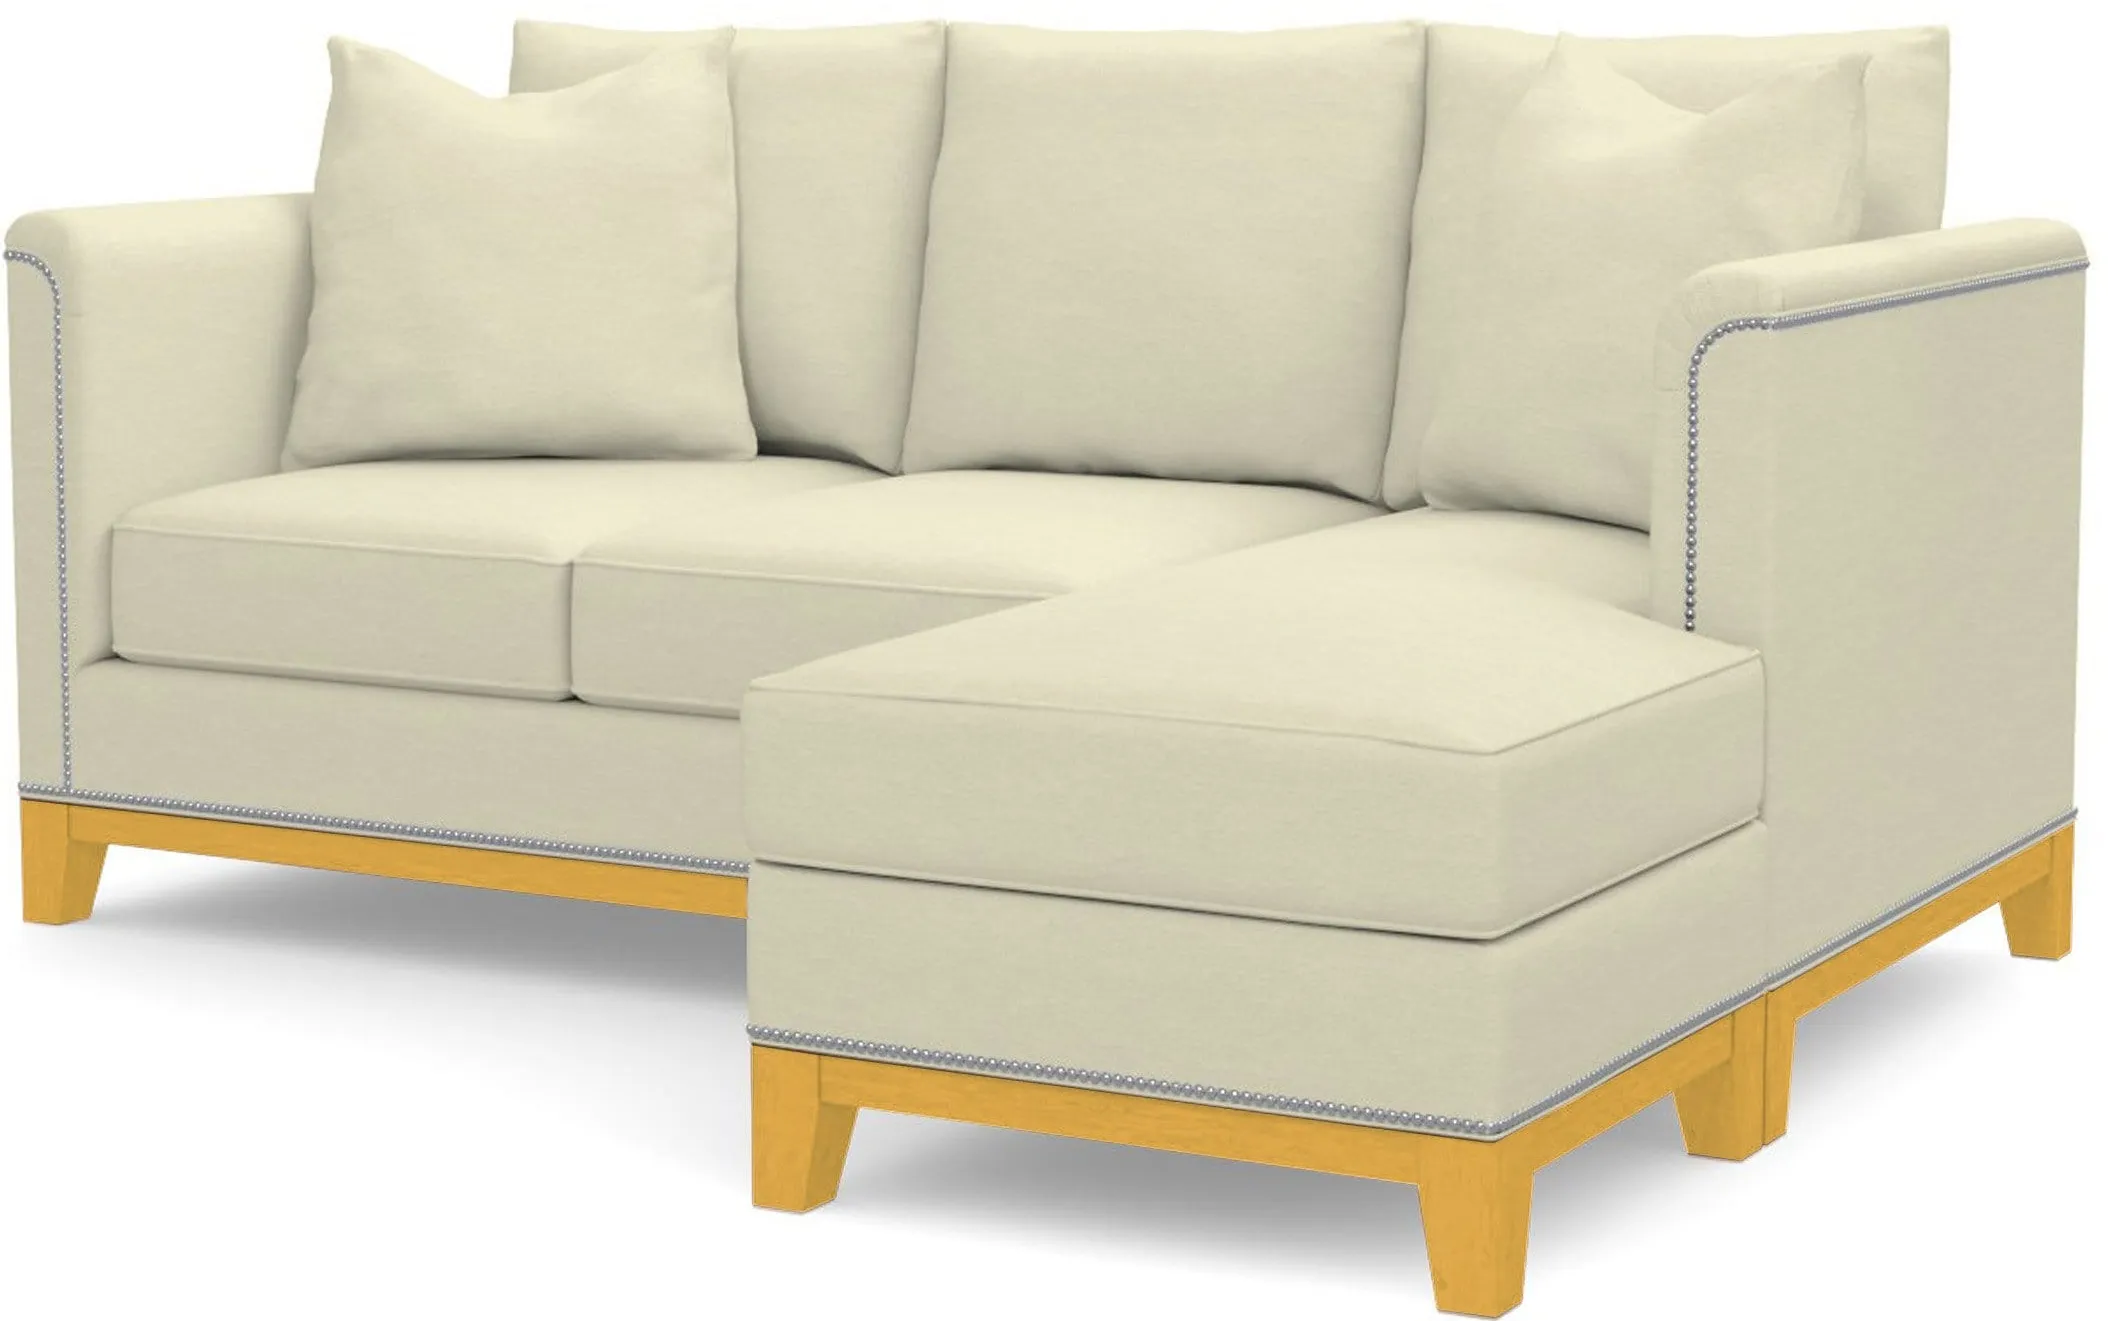 La Brea Reversible Chaise Sleeper Sofa Bed